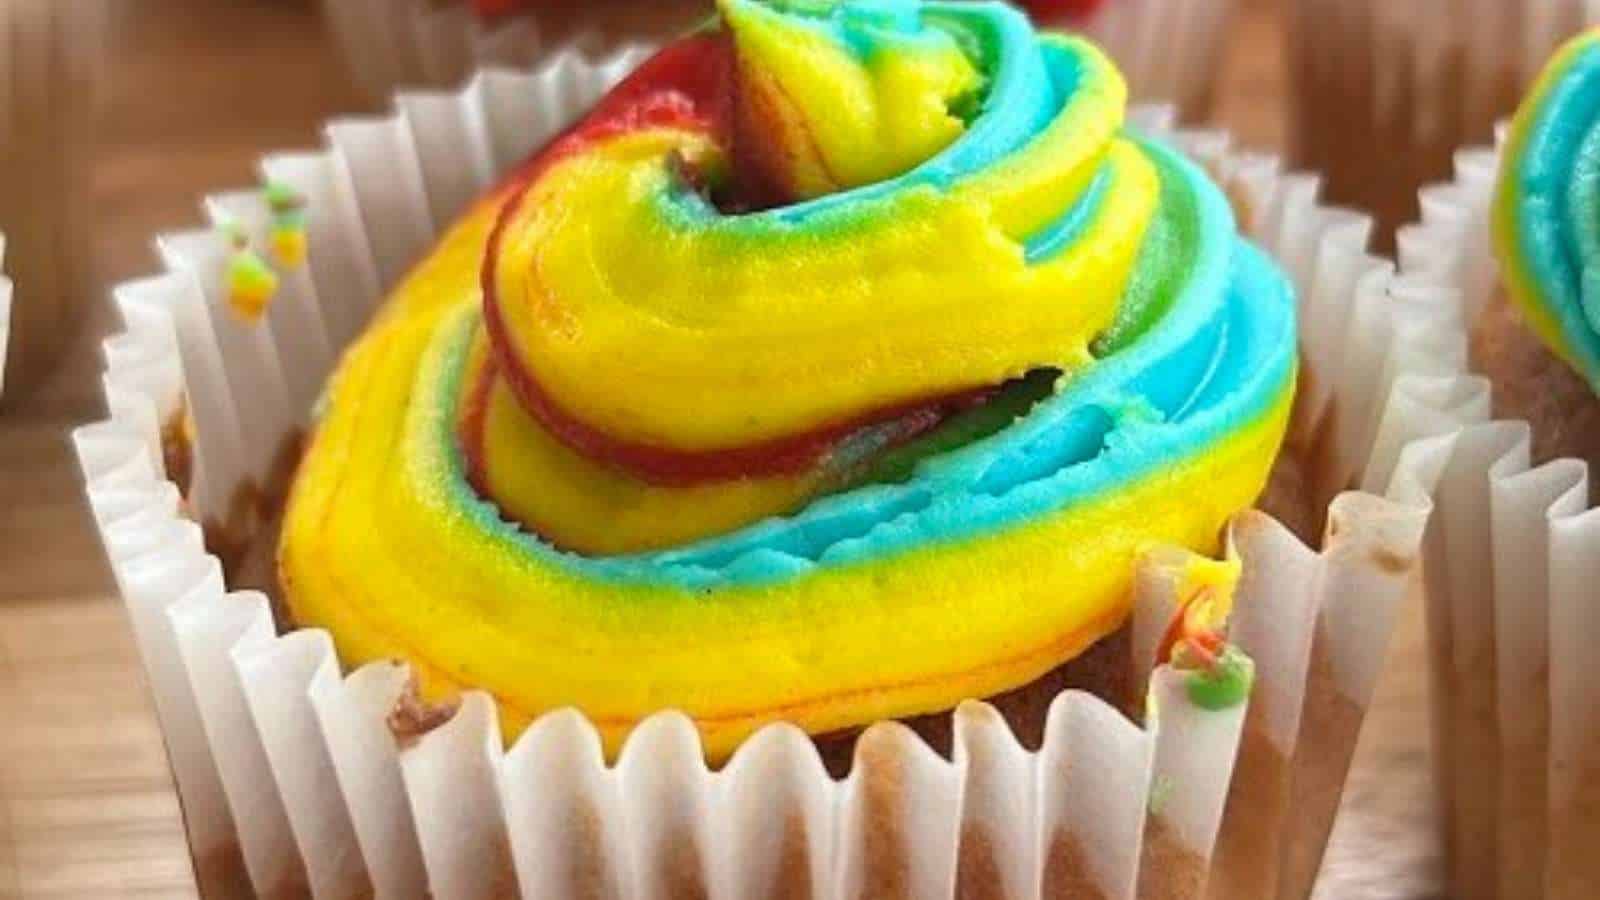 Rainbow cupcakes with rainbow icing.